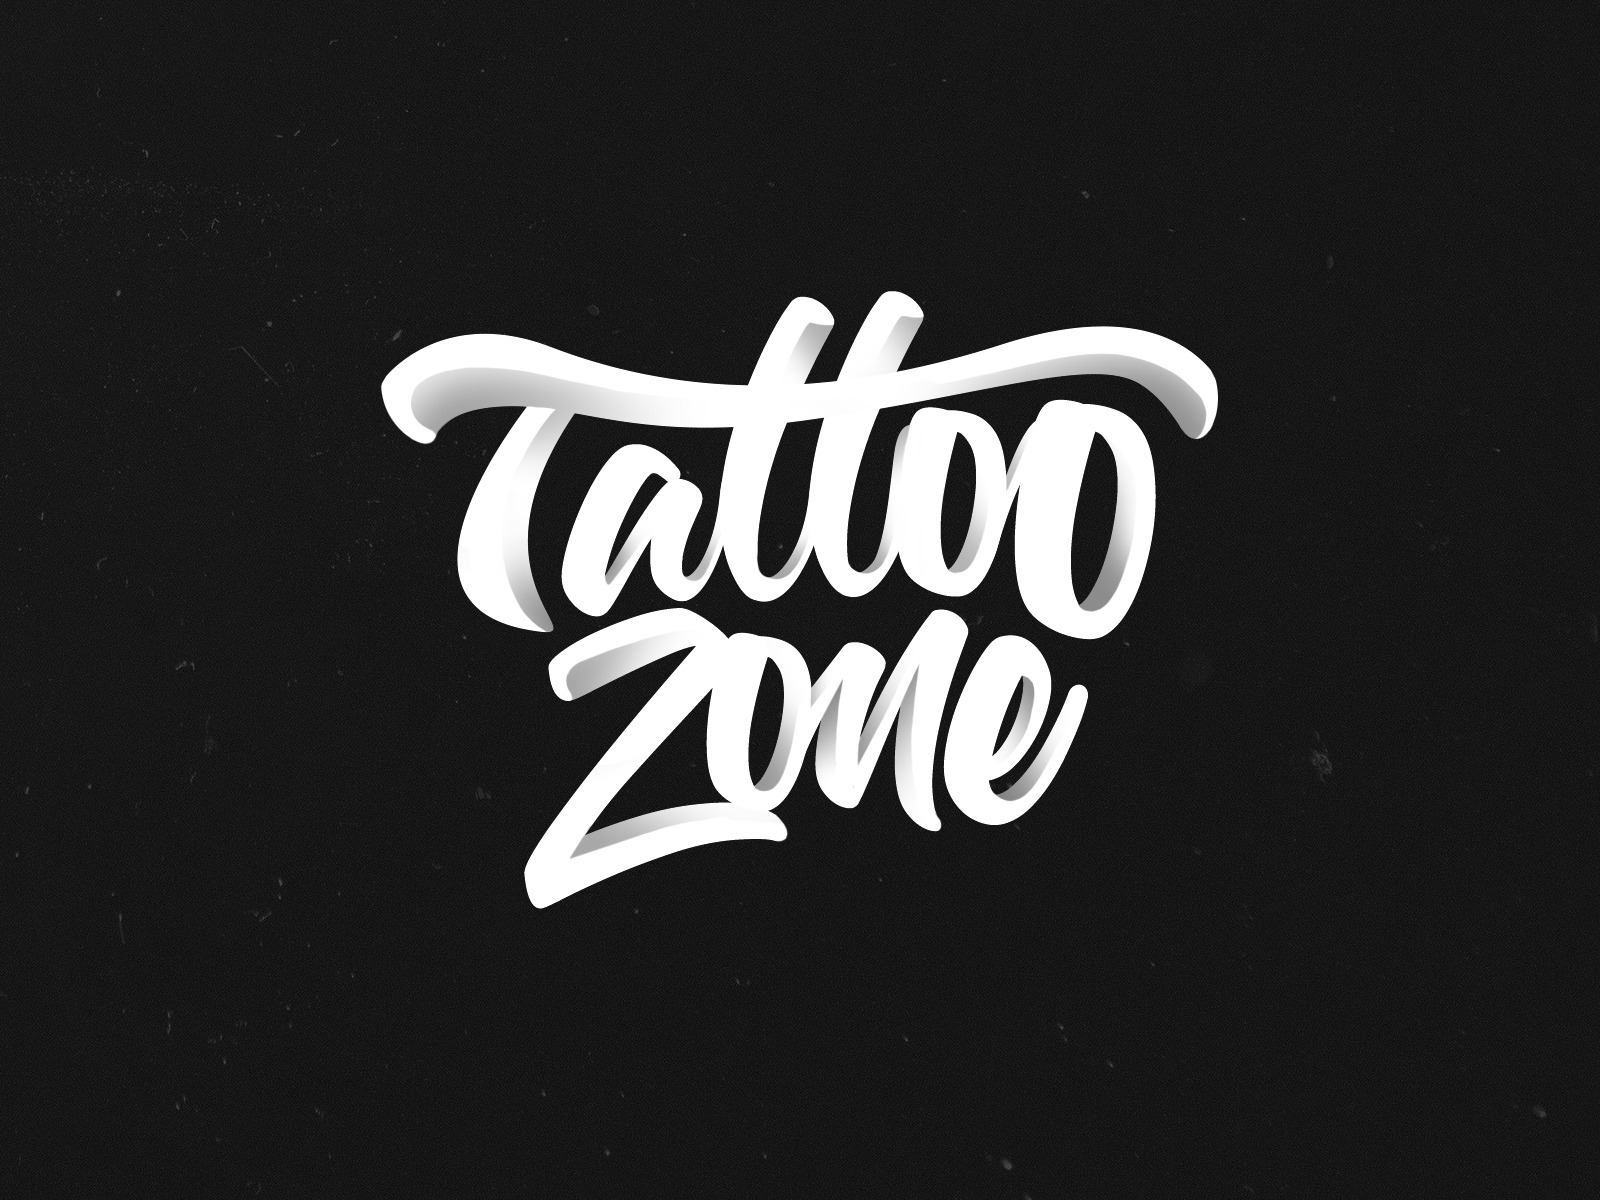 Nobys Tattoo Zone